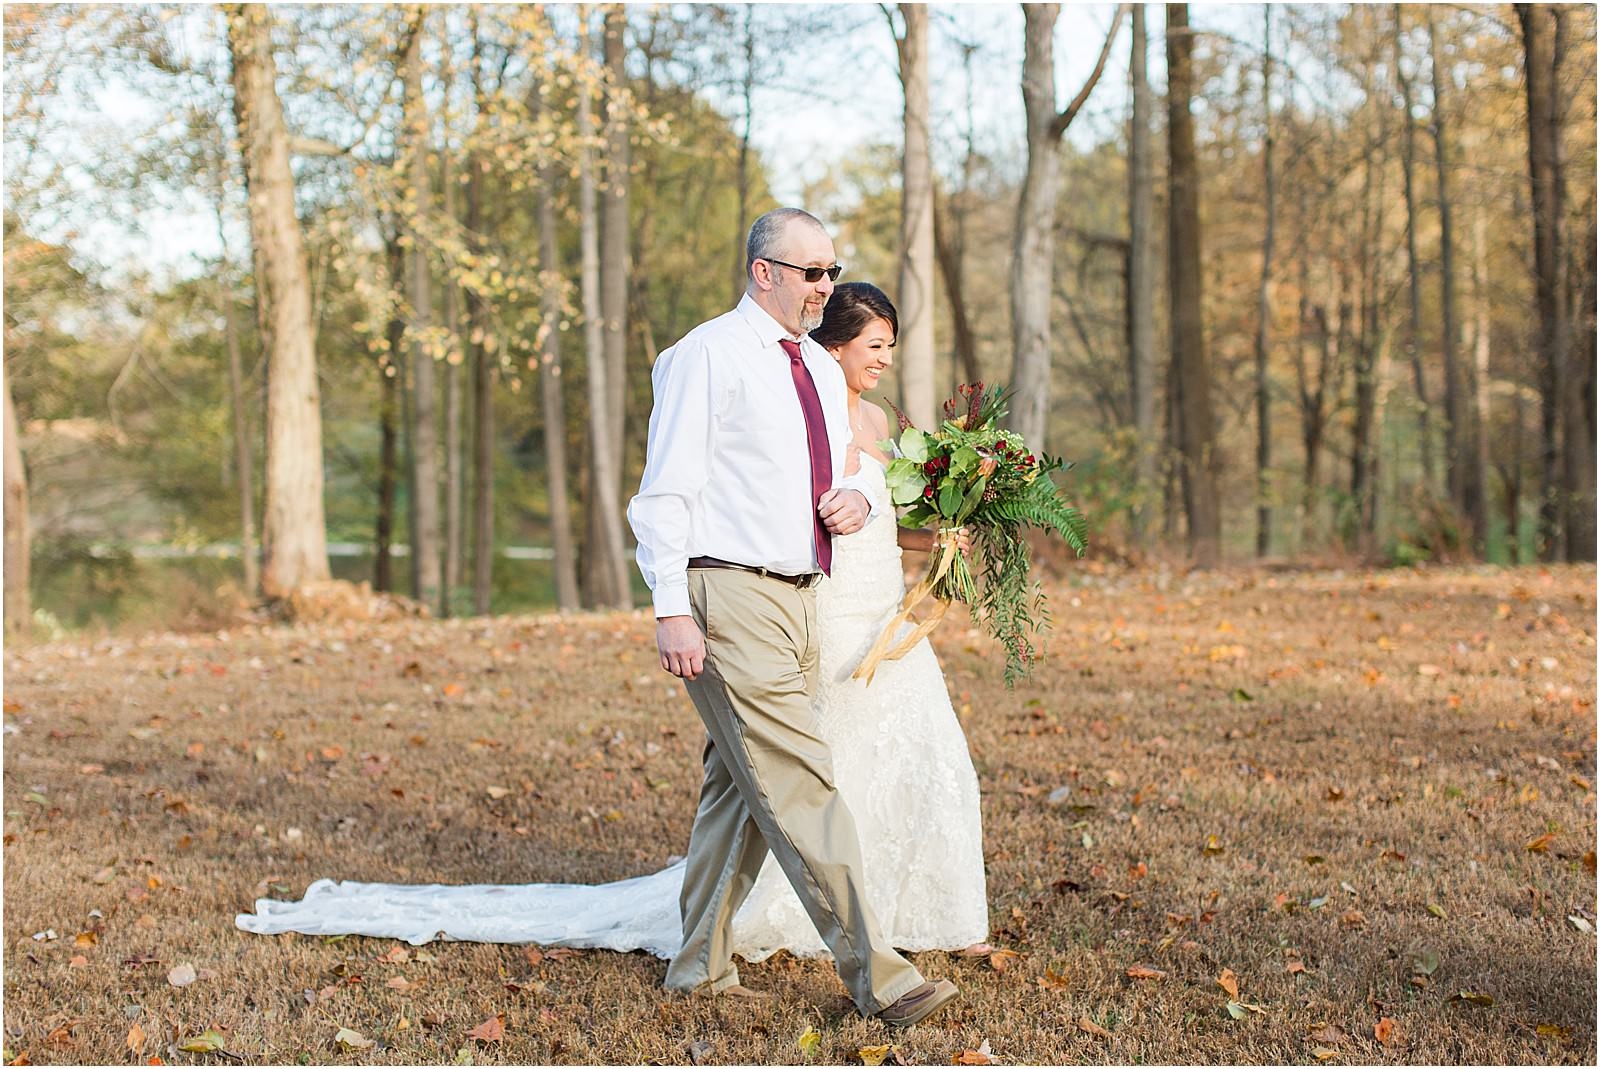 Walker and Alyssa's intimate fall wedding in Southern Indiana. | Wedding Photography | The Corner House Wedding | Southern Indiana Wedding | #fallwedding #intimatewedding | 064.jpg